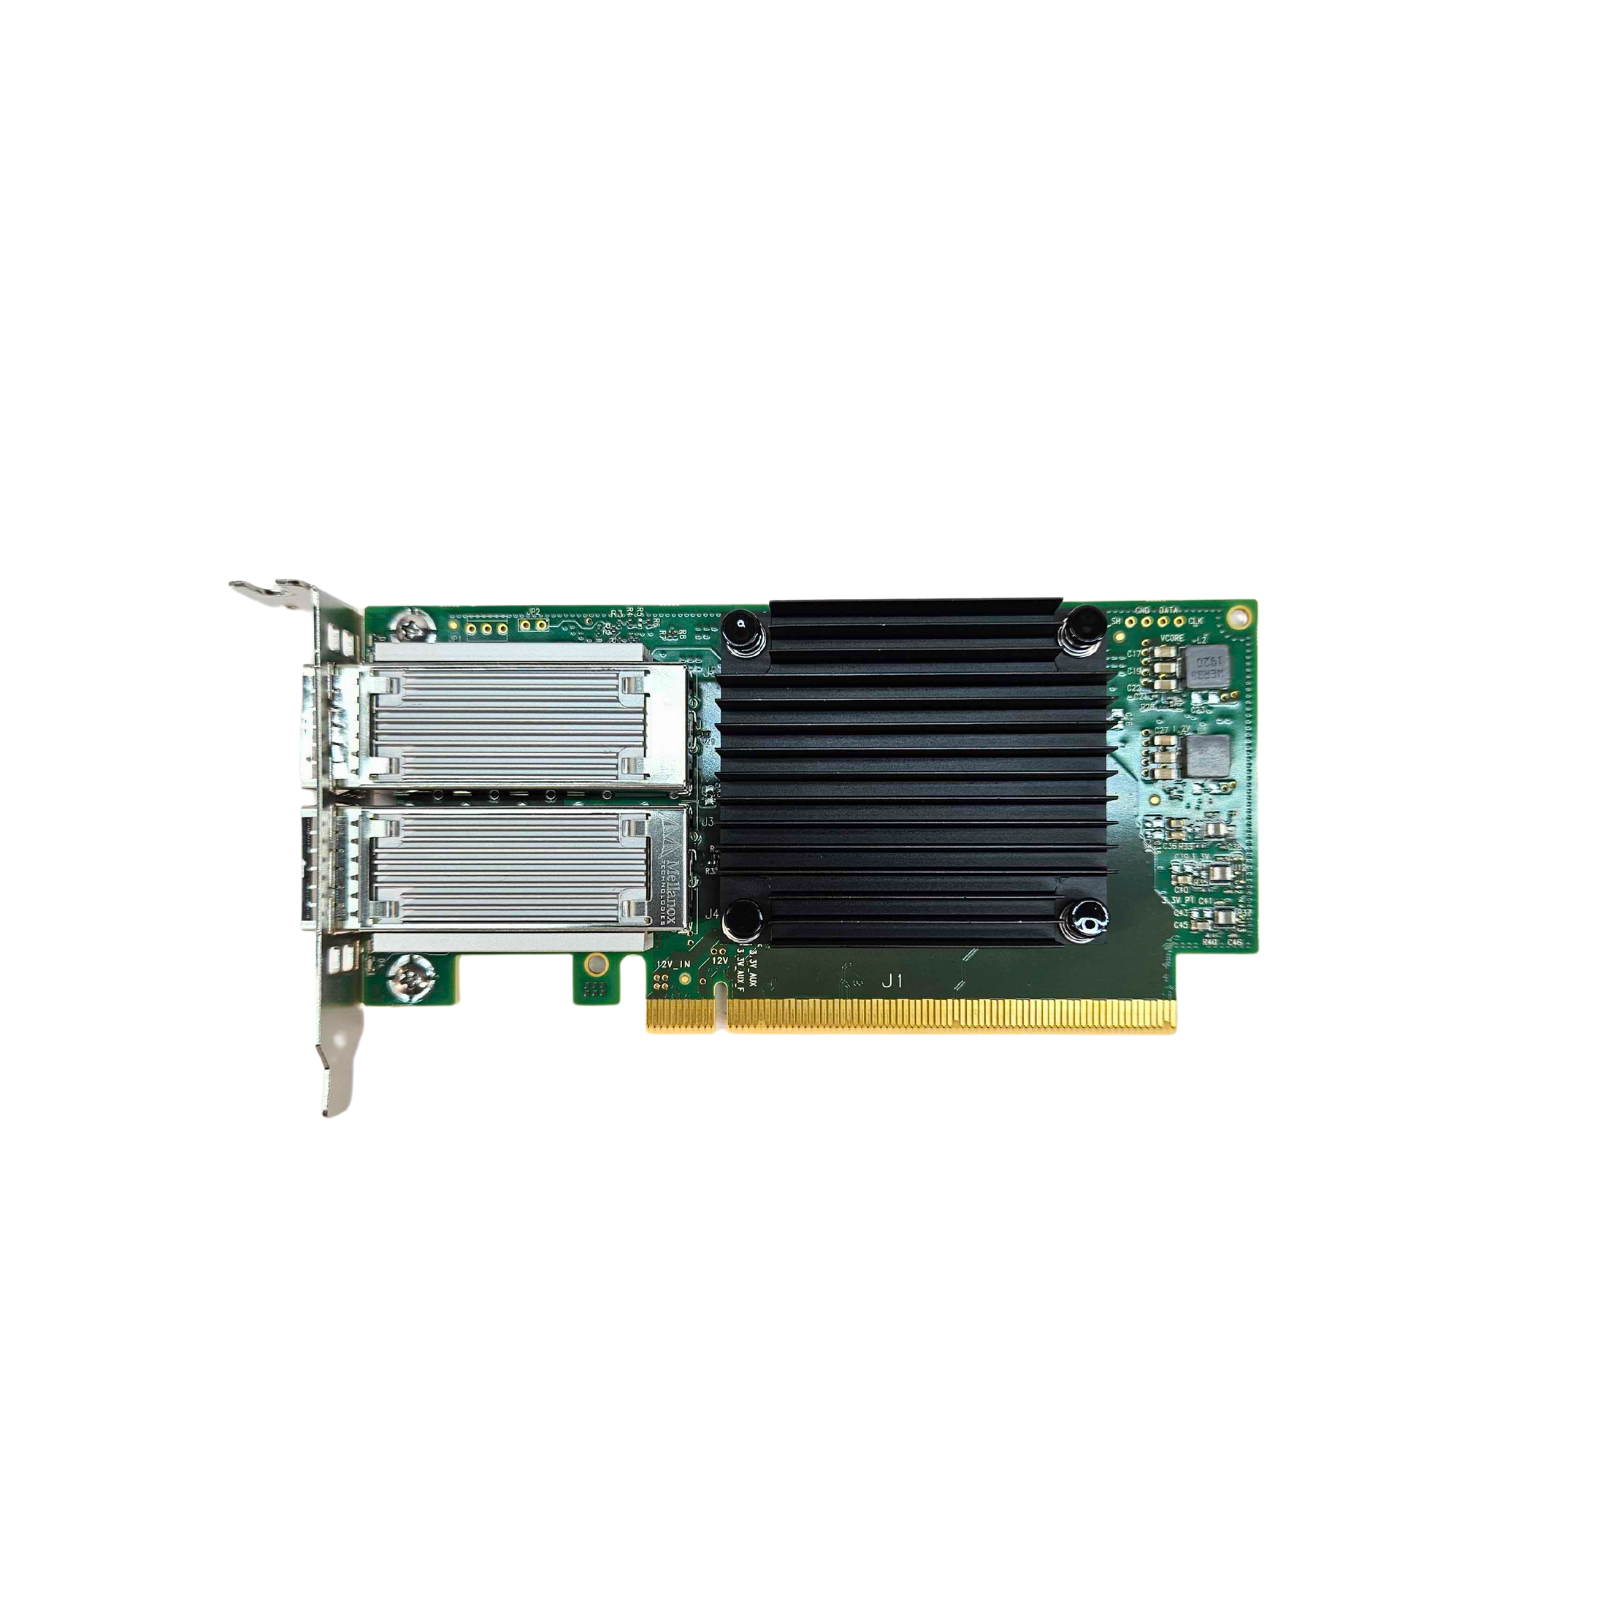 Dell Mellannox Cx516a Connectx-5 Dual Port 100 GB NIC Network Interface Card  (09FTMY)